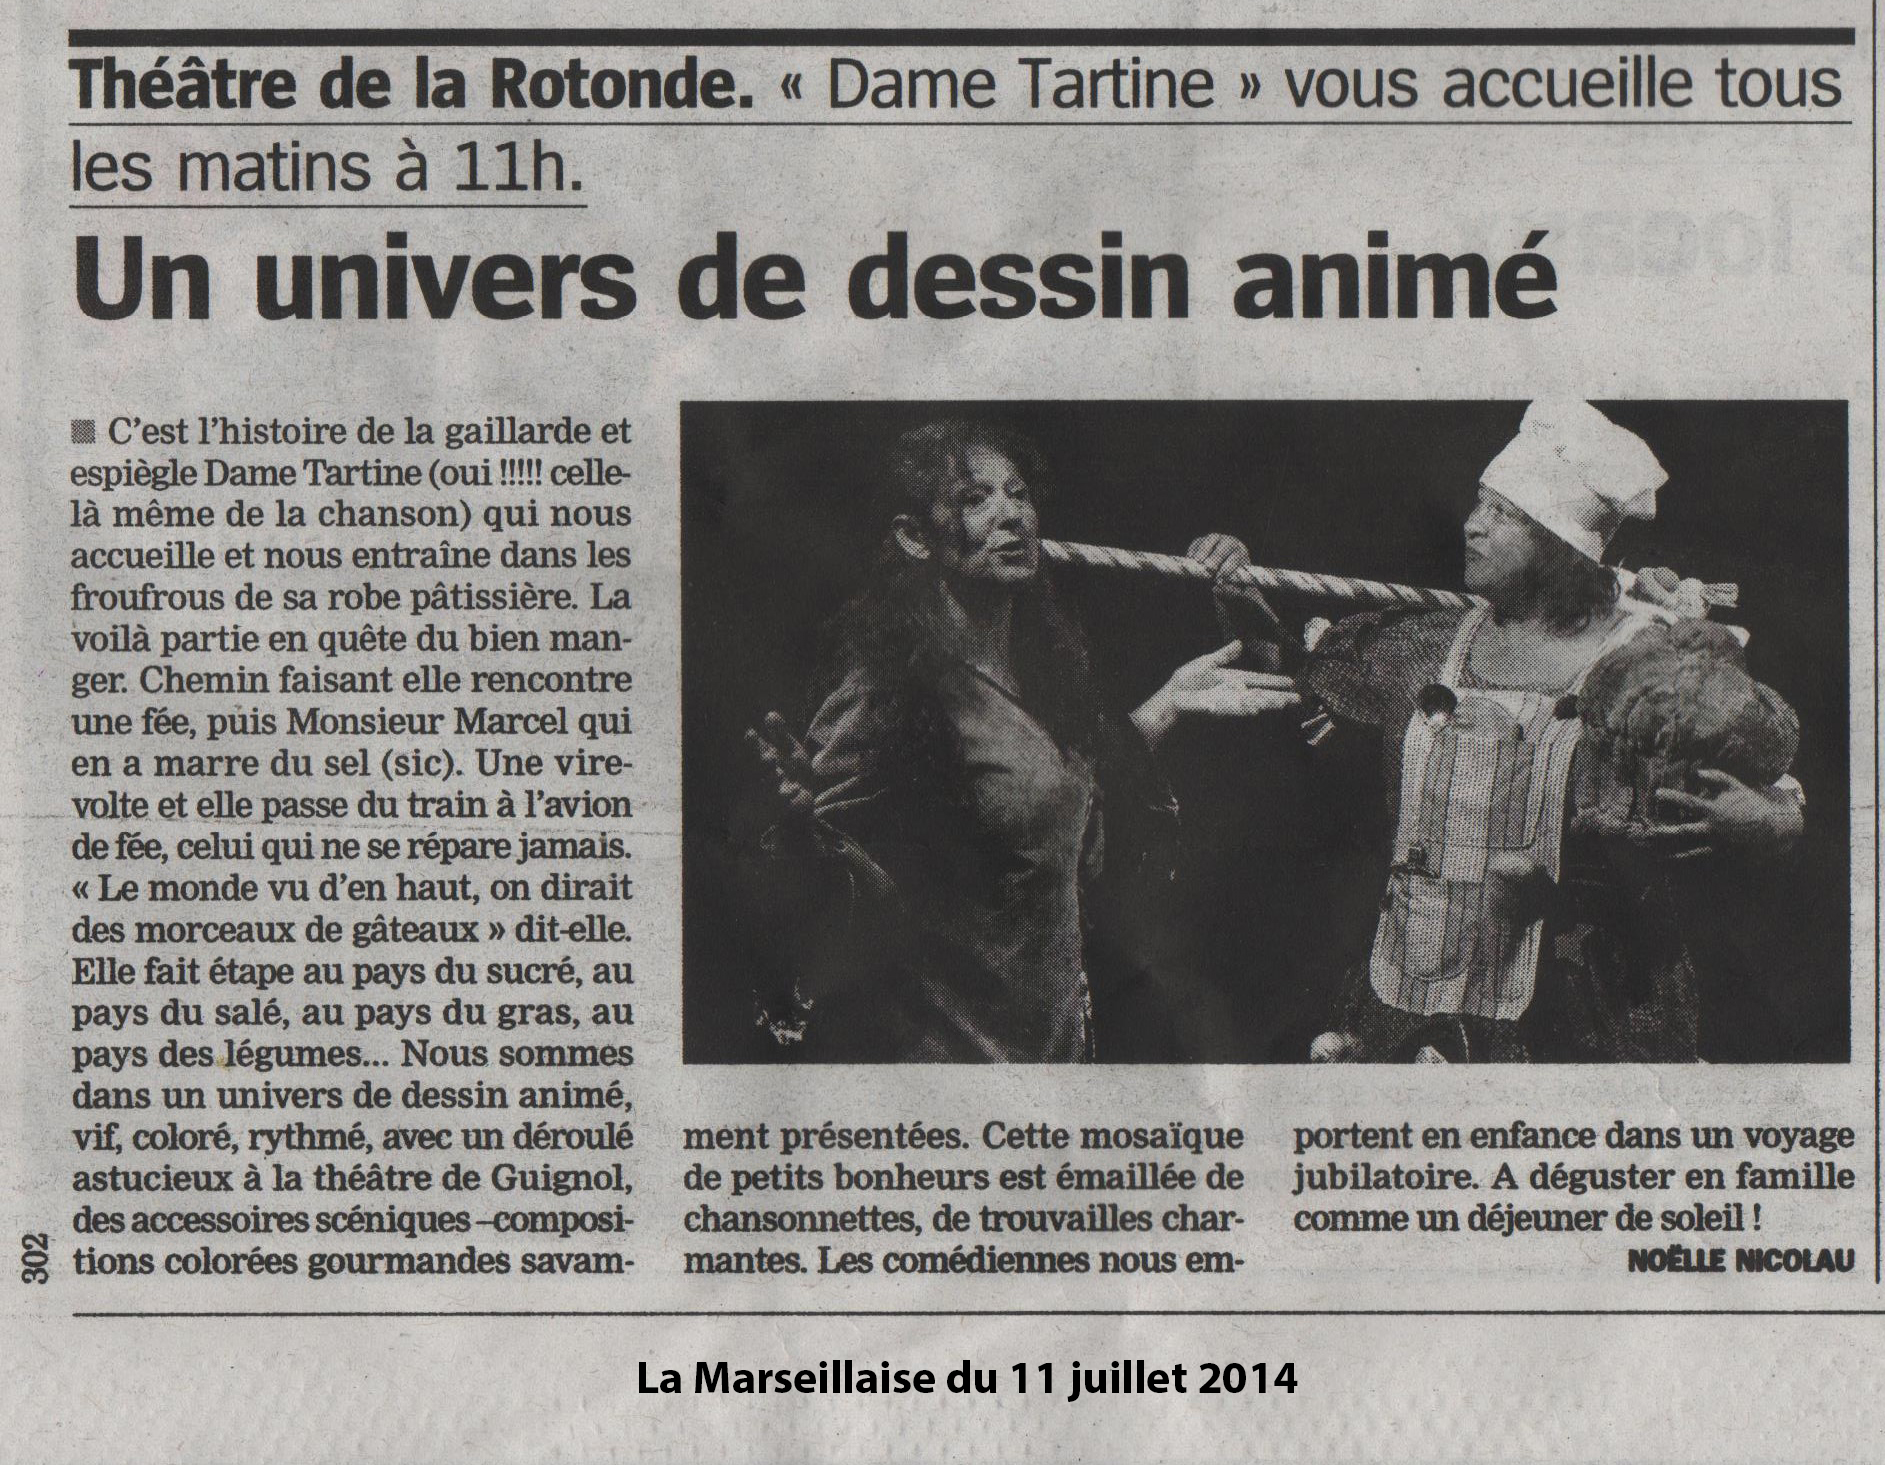 ARTICLE DE PRESSE - spectacle Dame tartine - La Marseillaise - Avignon, juillet 2014 